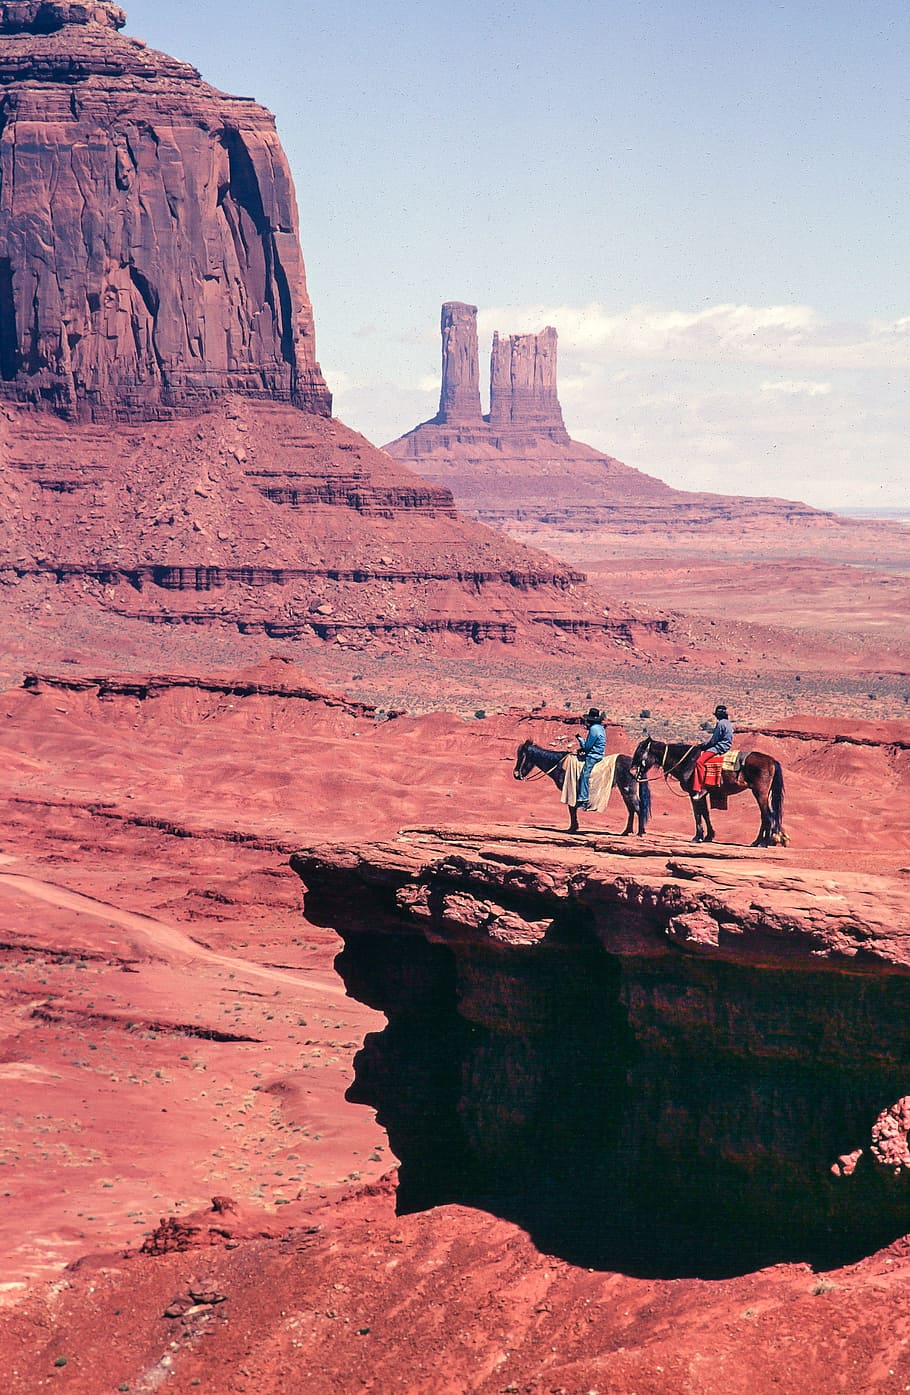 dua, koboi penunggang kuda, john ford point, monument valley, arizona, amerika, canyon, cowboy, desert, erosi